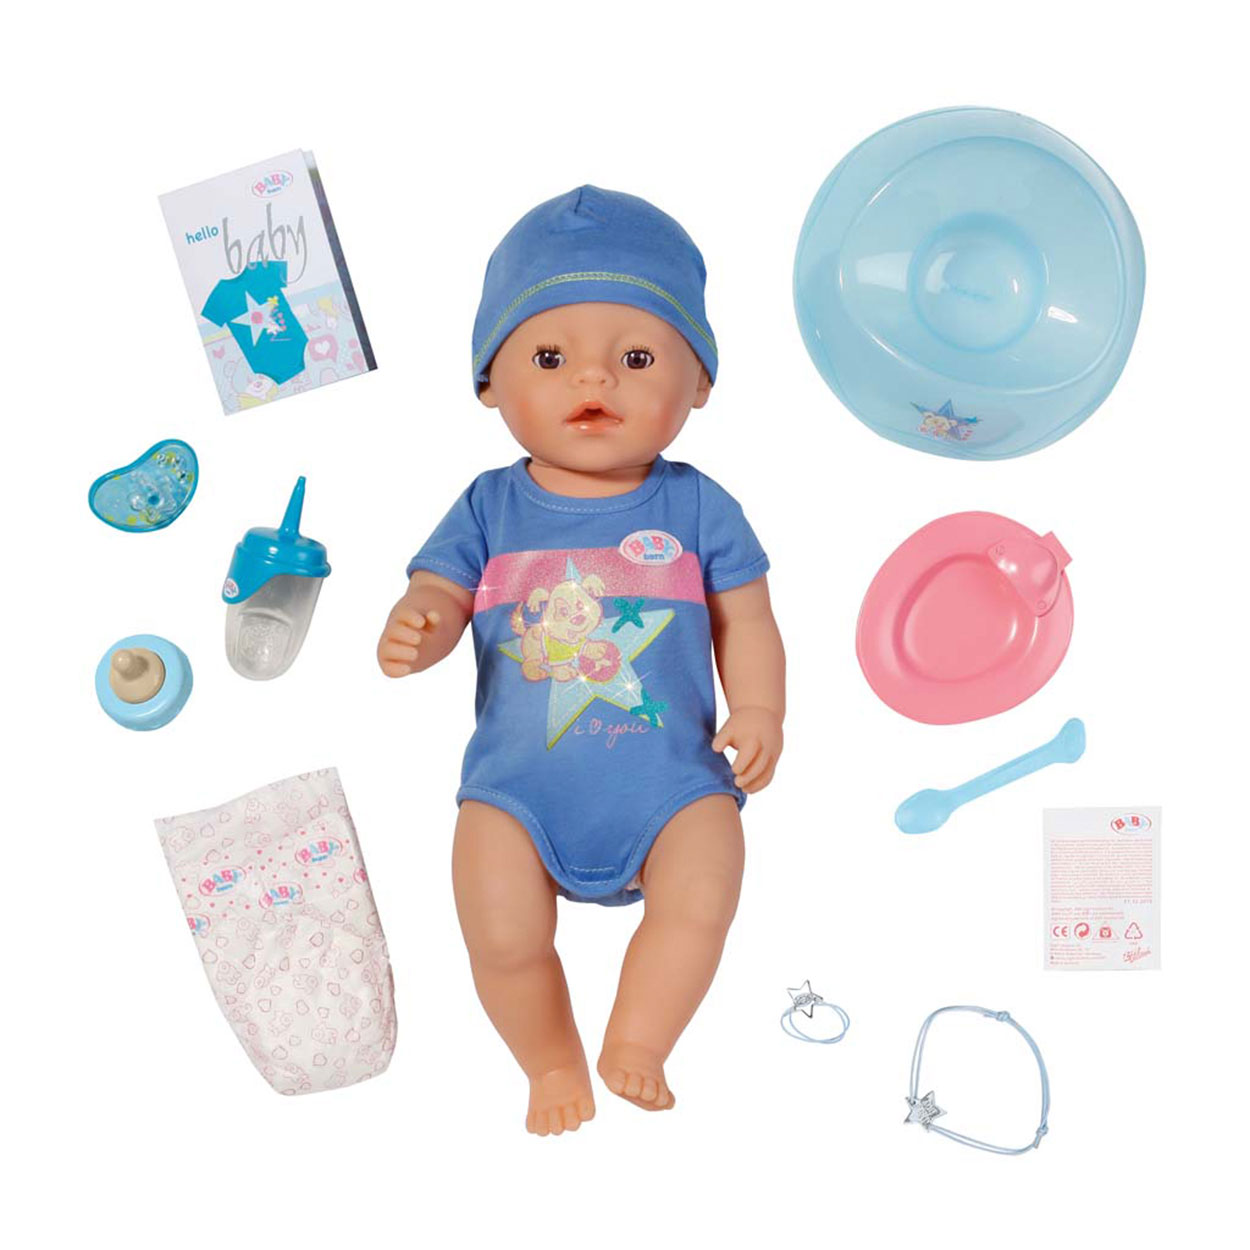 Onbemand doen alsof handig BABY born BOY Interactieve Pop | Thimble Toys